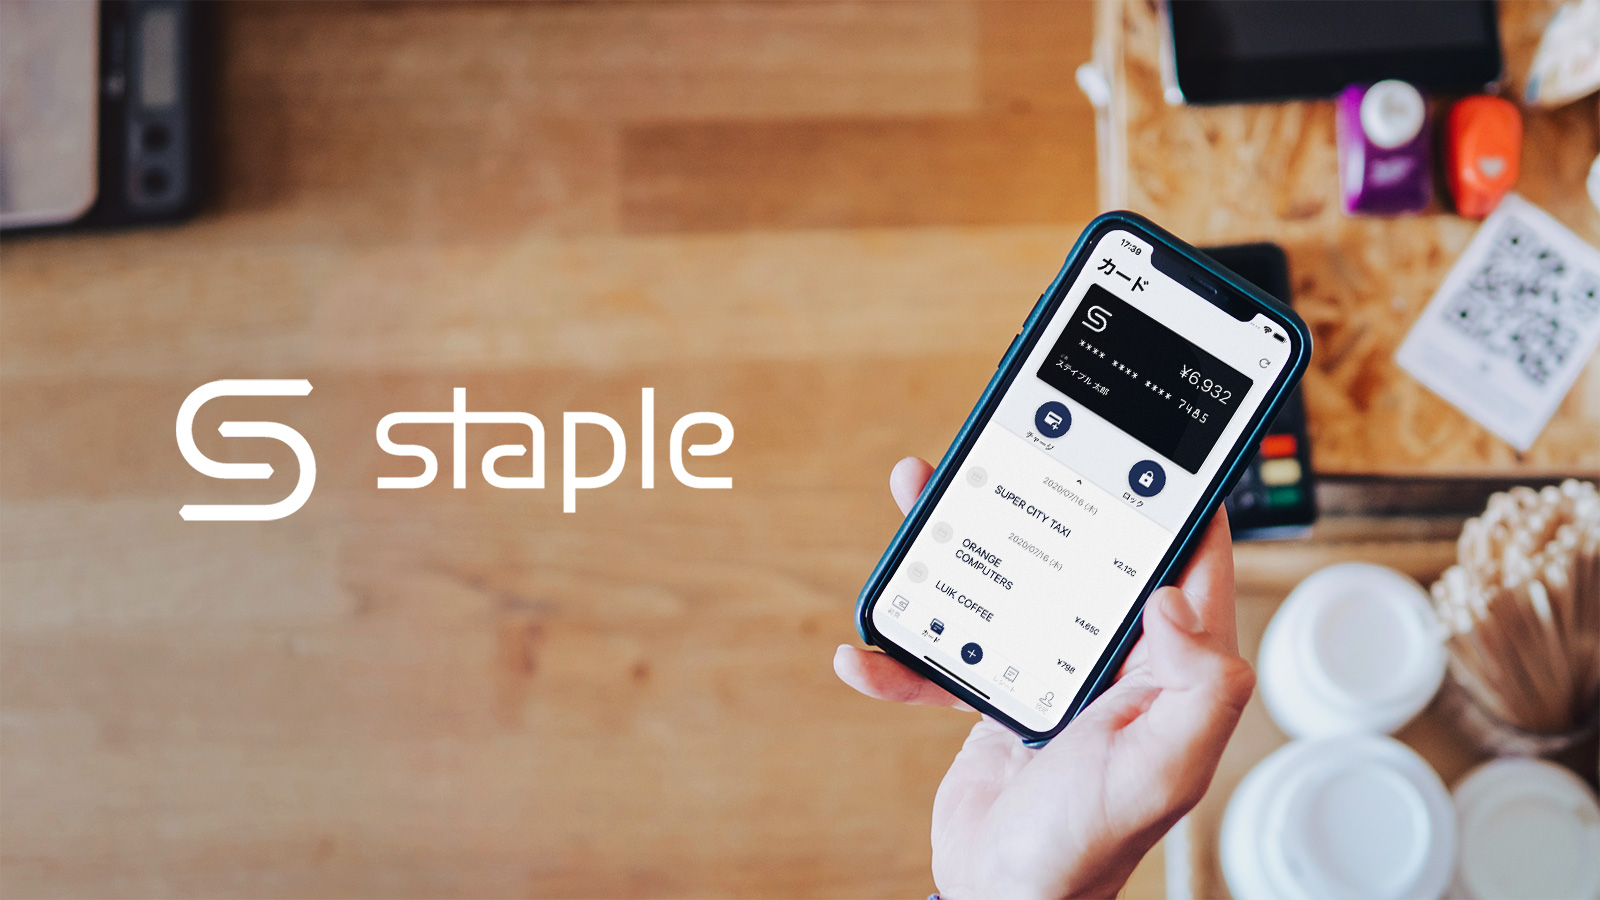 Staple-app-phone02.jpg